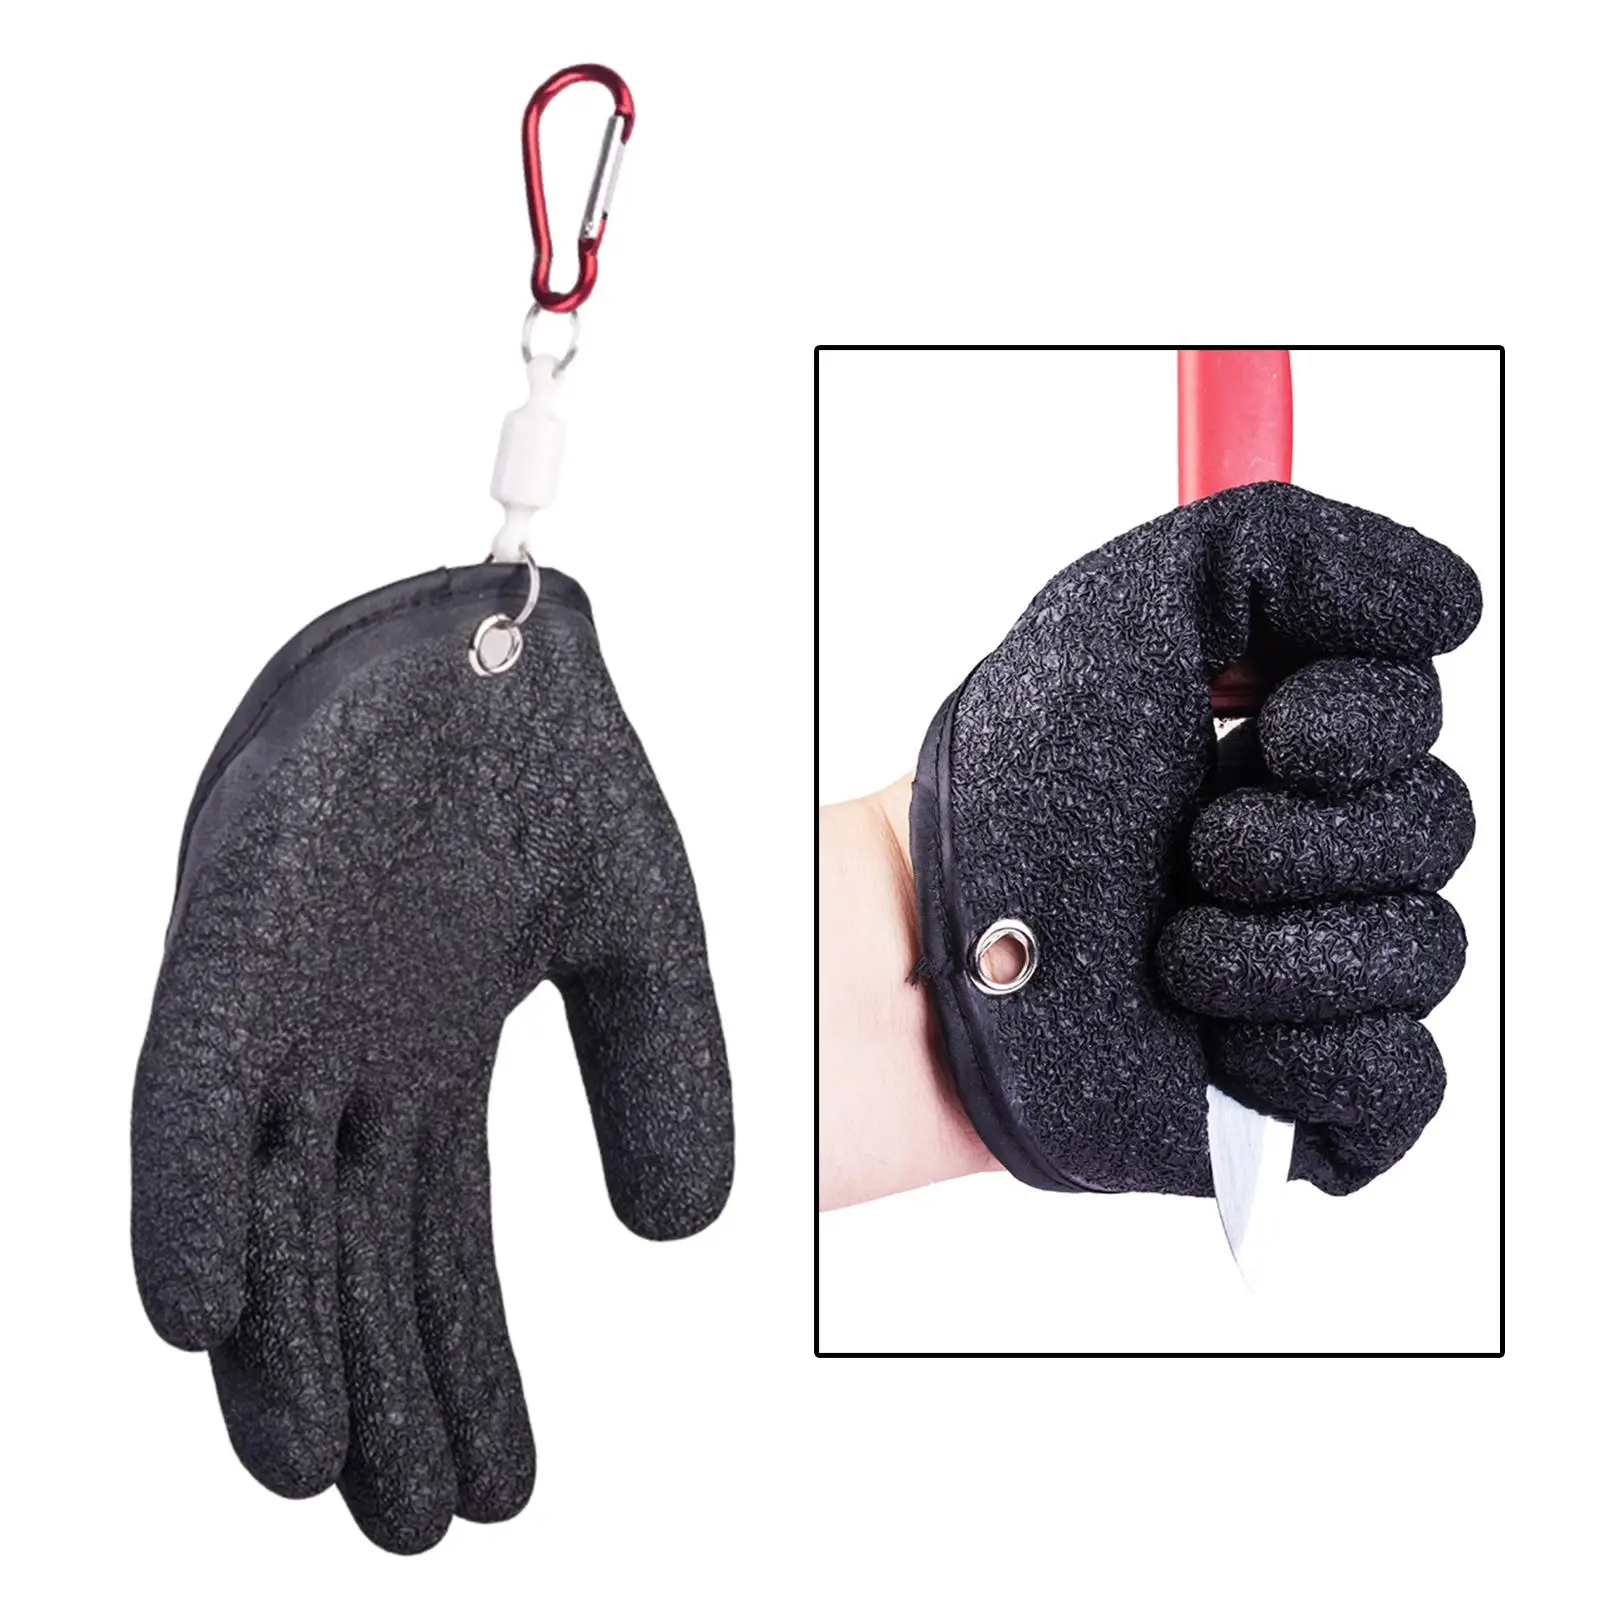 Magnetic Anti-slip Fishing Hunting Glove W/Hook Fisherman Puncture Resistant